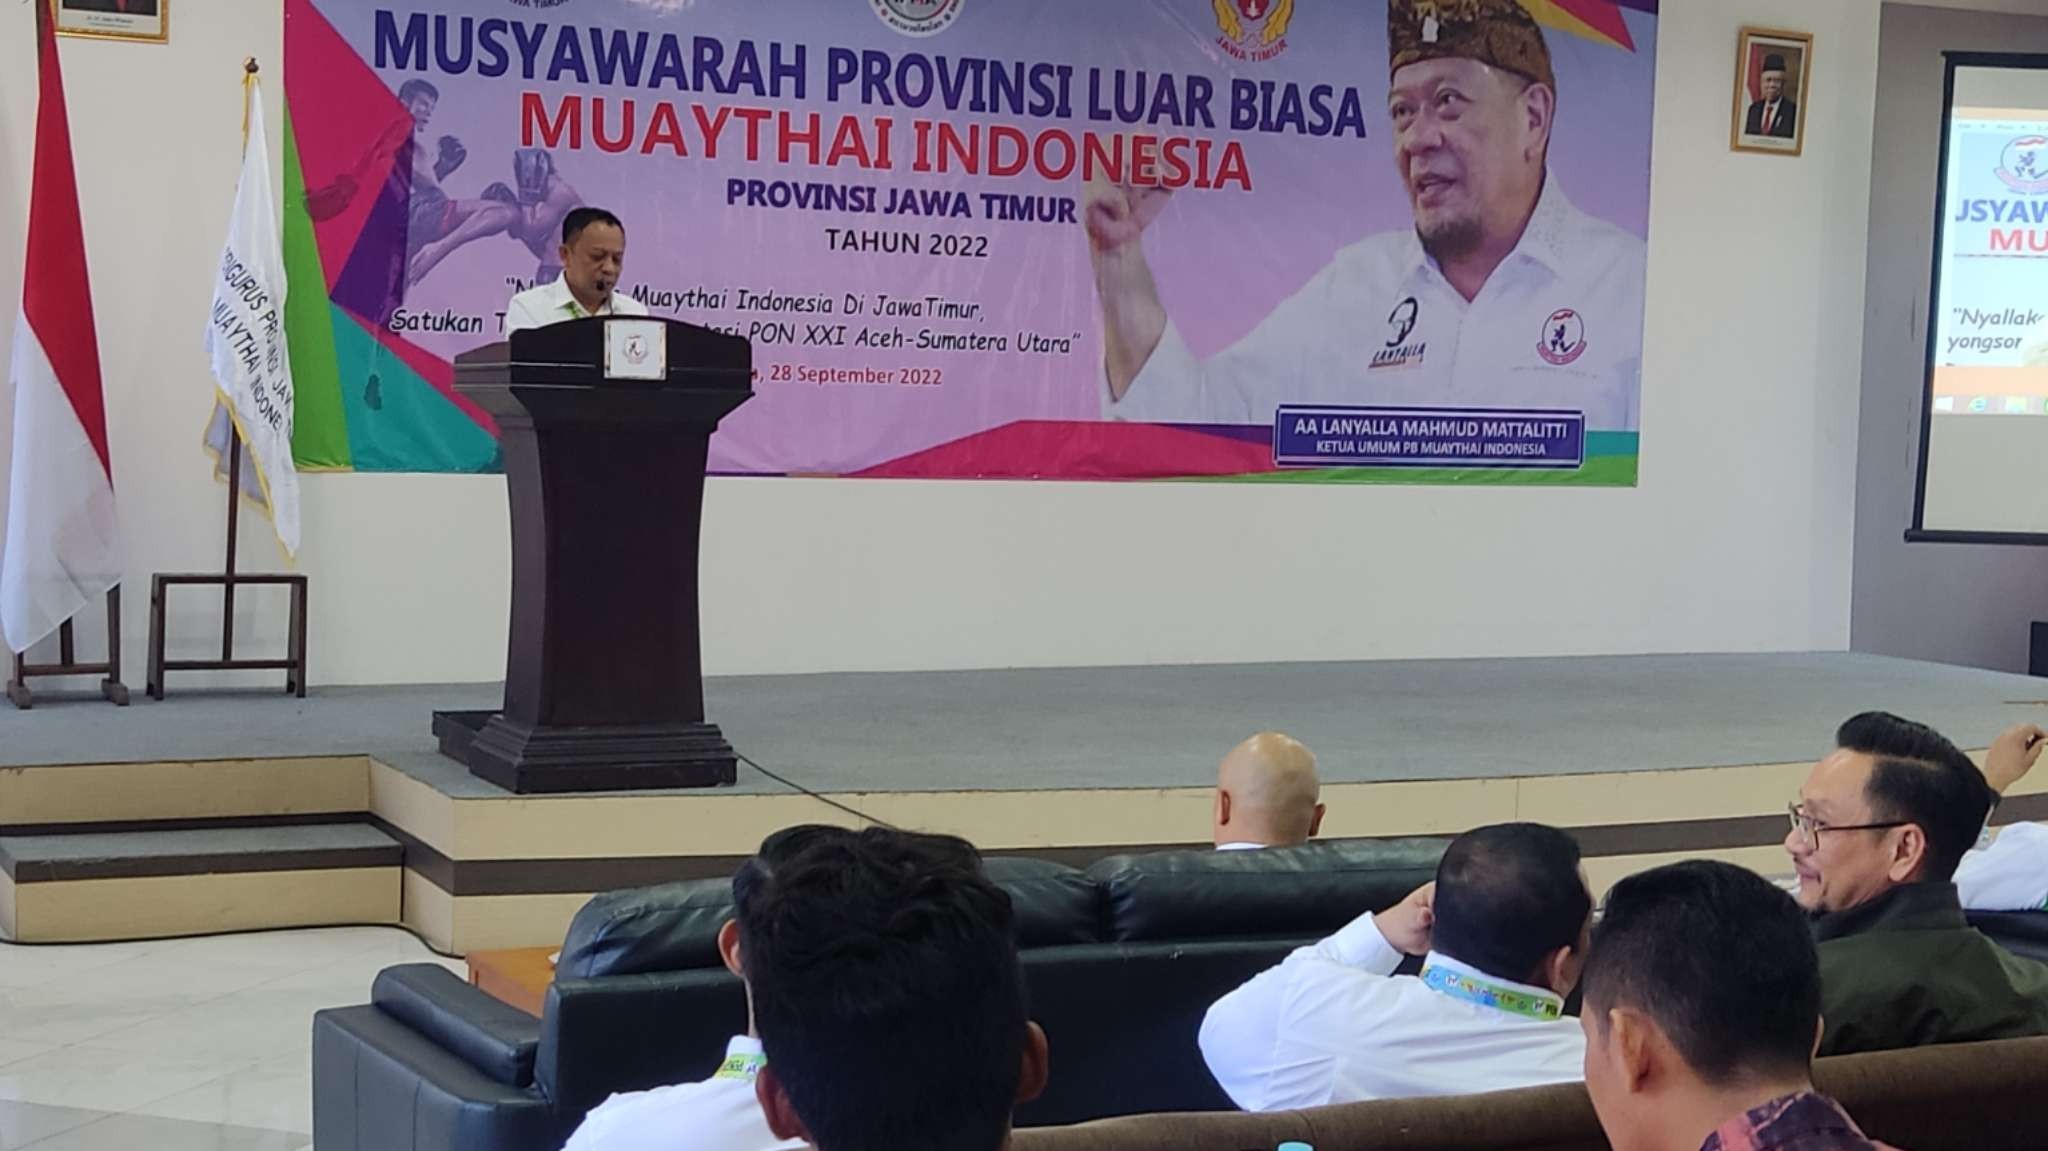 Baso Juherman pimpin Muay Thai Jatim, periode 2022-2026, terpilih secara aklamasi dalam Musprovlub MI Jatim di Graha Kadin, Surabaya, Rabu 28 September 2022. (Foto: Fariz Yarbo/Ngopibareng.id)